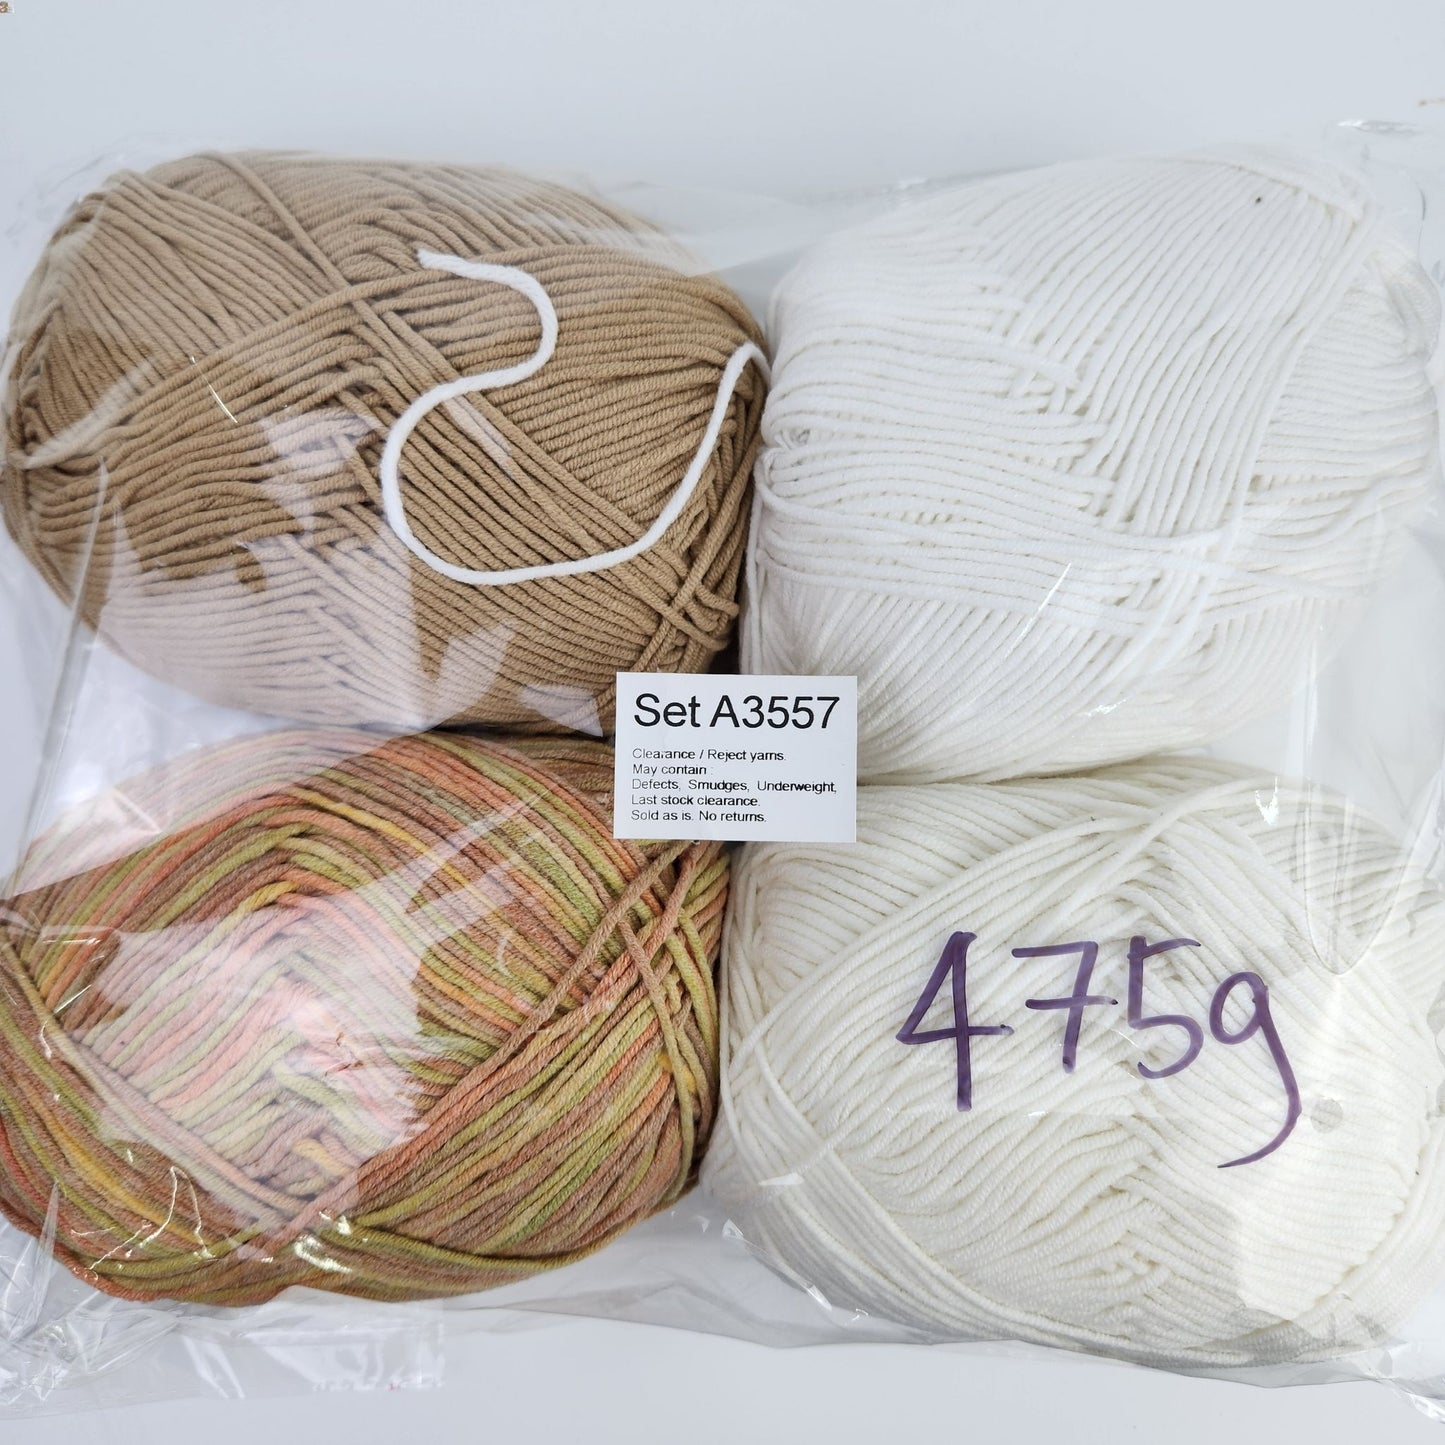 Milk Cotton Series MCS Clearance / Reject yarns (4 balls per pack) Benang Kait